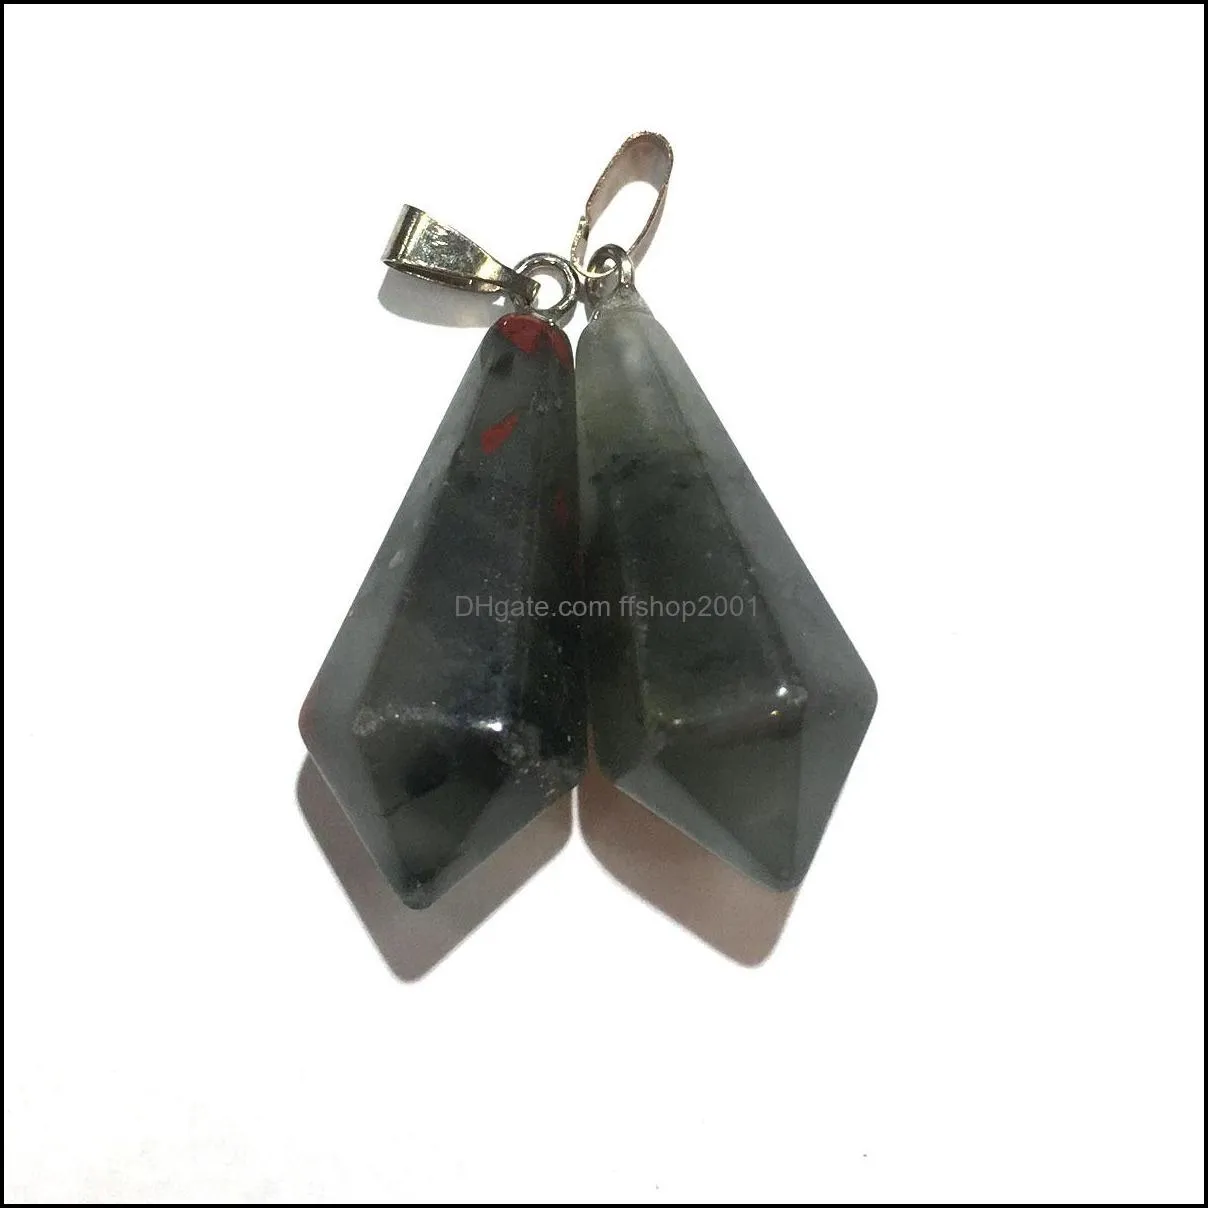 circular cone natural stone pendant hang pendulum decorations reiki healing chakra rose quartz crystal pendulo charms for necklace earrings making